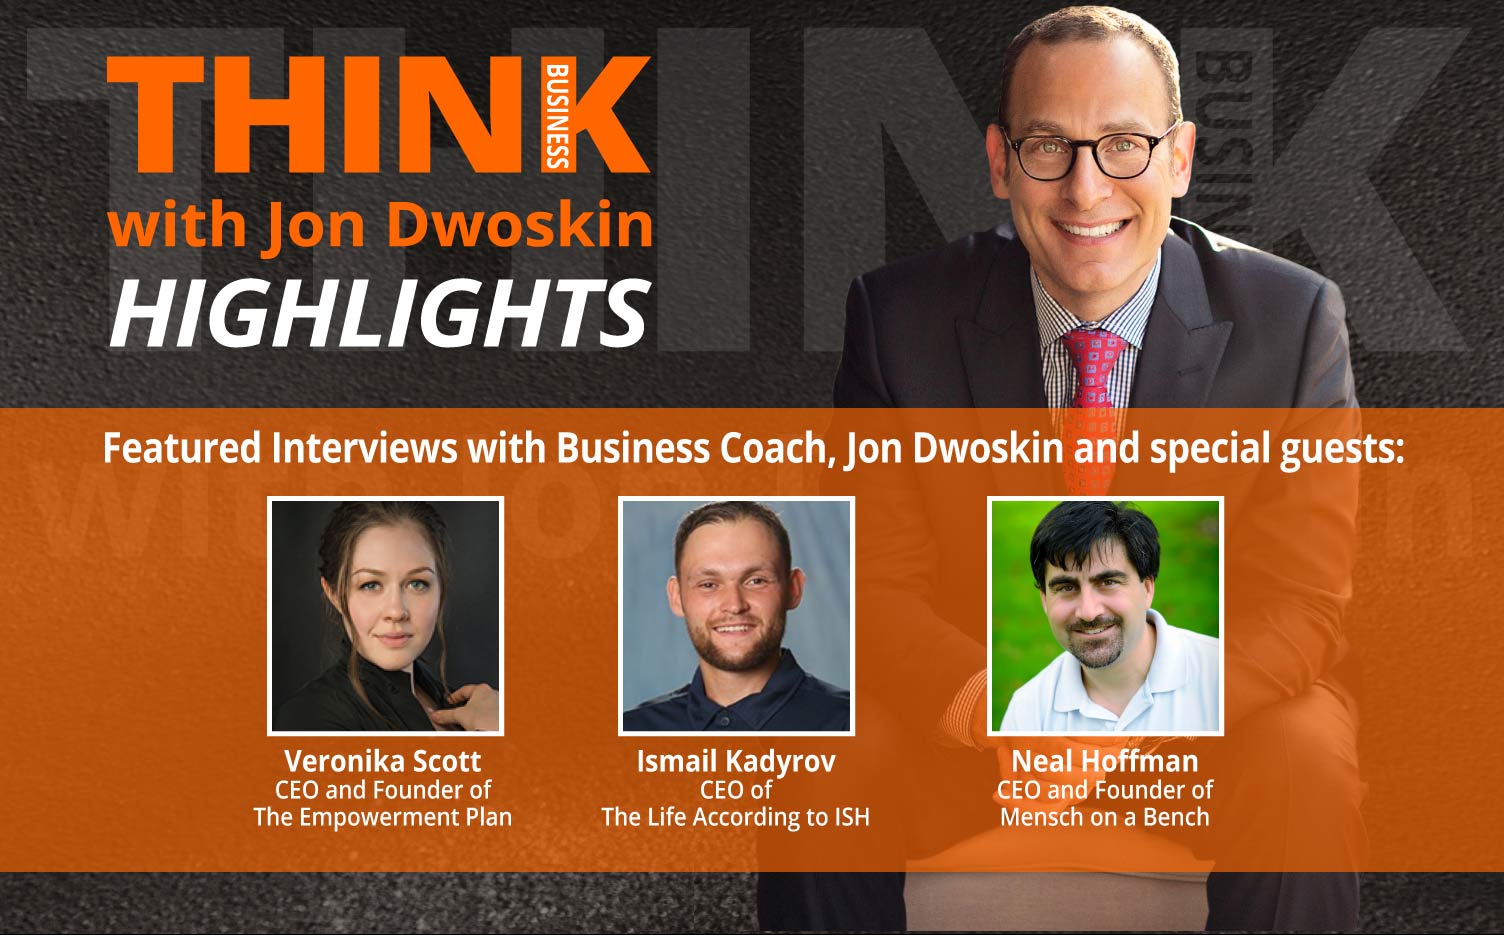 THINK Business: HIGHLIGHTS – Jon Dwoskin Featured Interviews with Veronika Scott, Ismail Kadyrov, Neal Hoffman